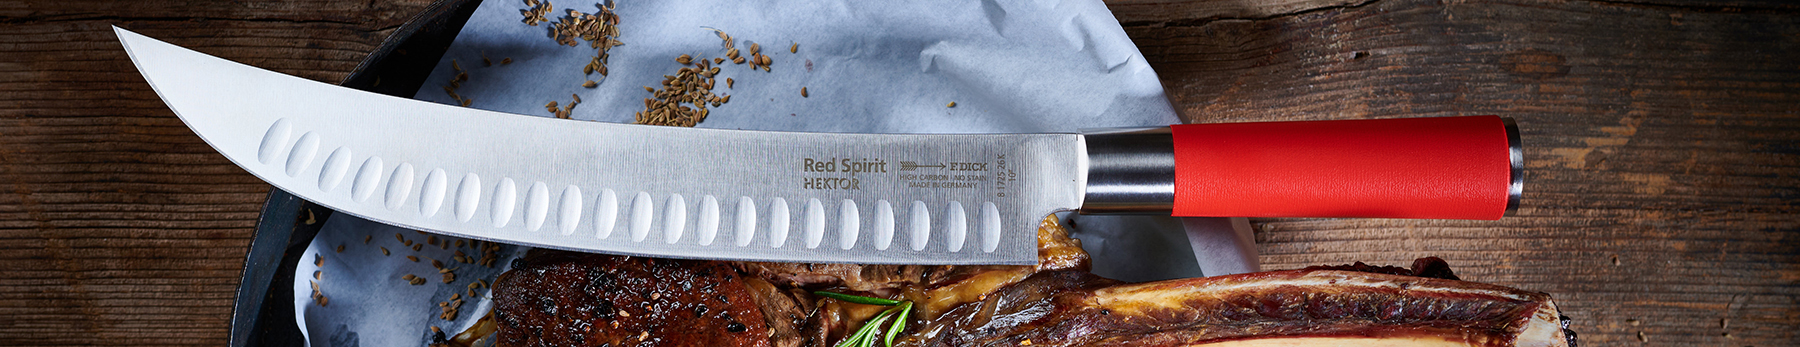 FDick Red Spirit Hektor knife on a wood background